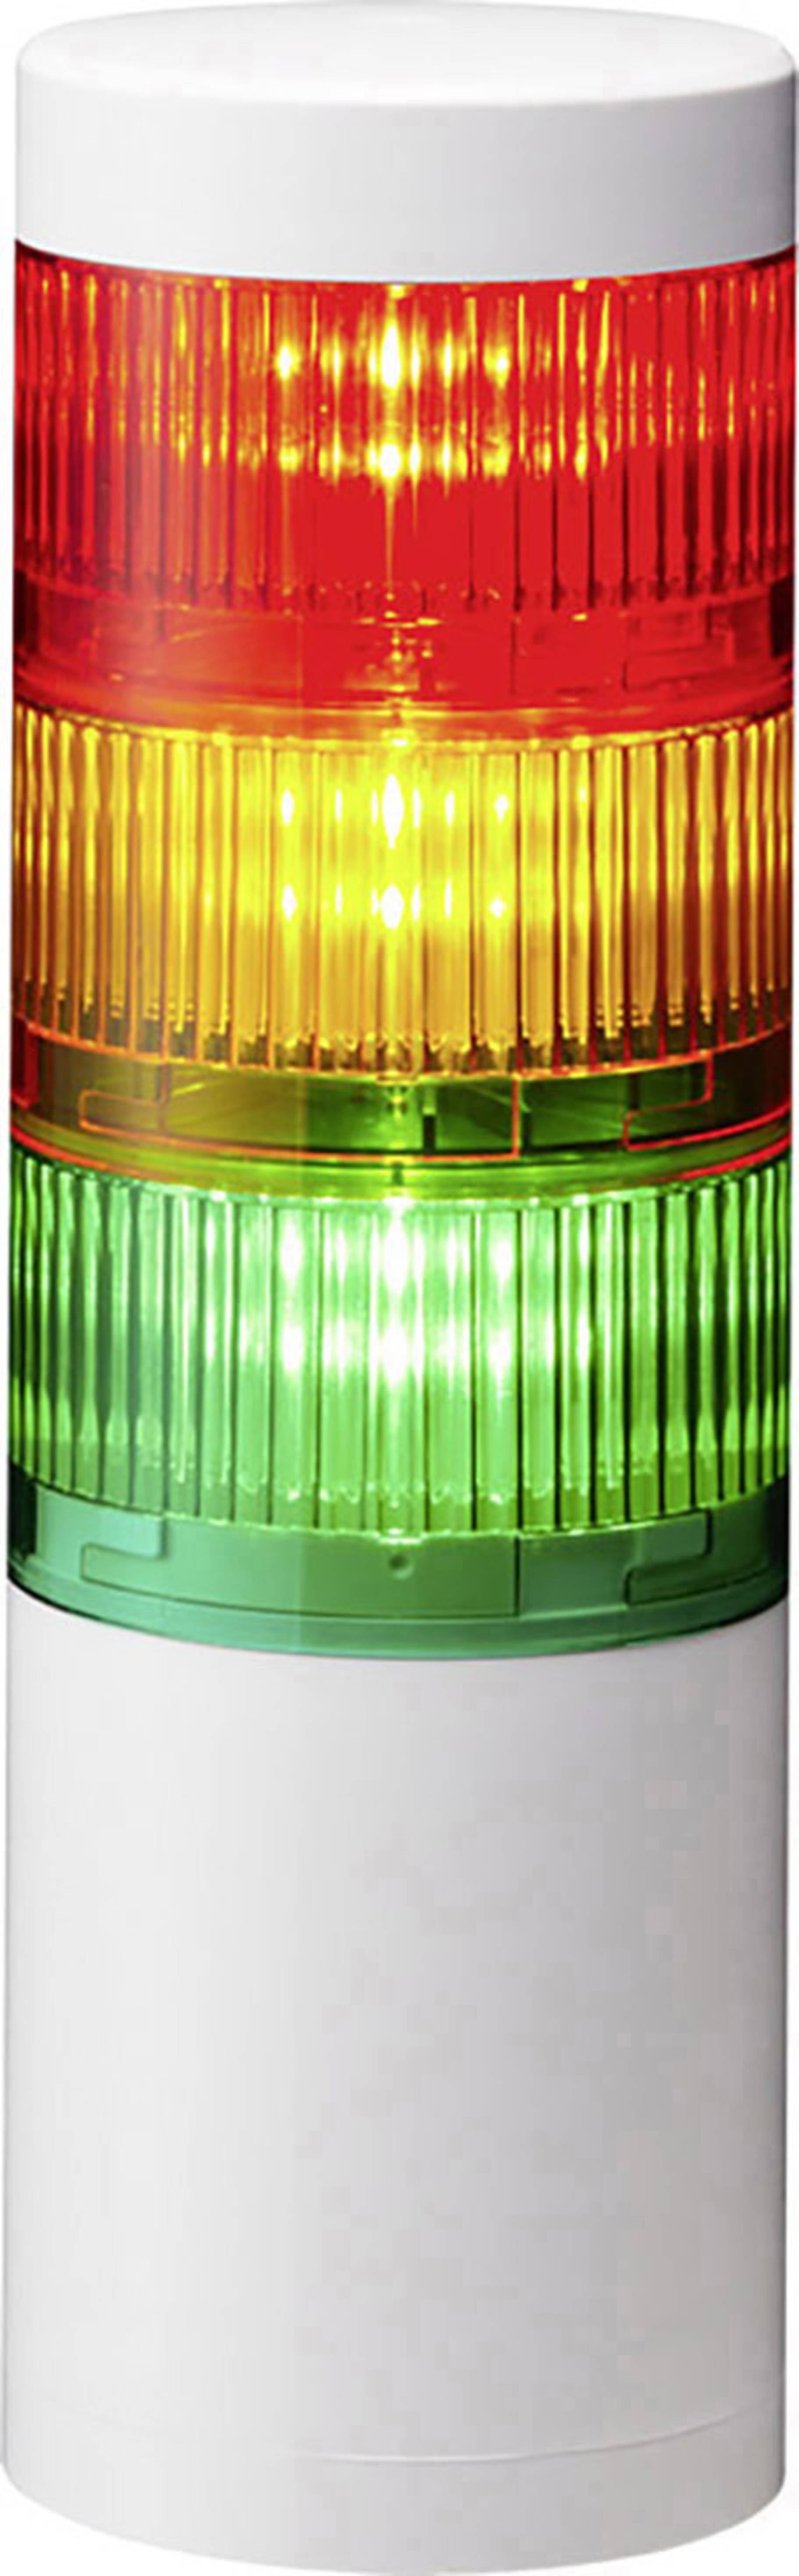 Patlite Signalsäule LR7-302WJNW-RYG LED 3-farbig, Rot, Gelb, Grün 1St ...